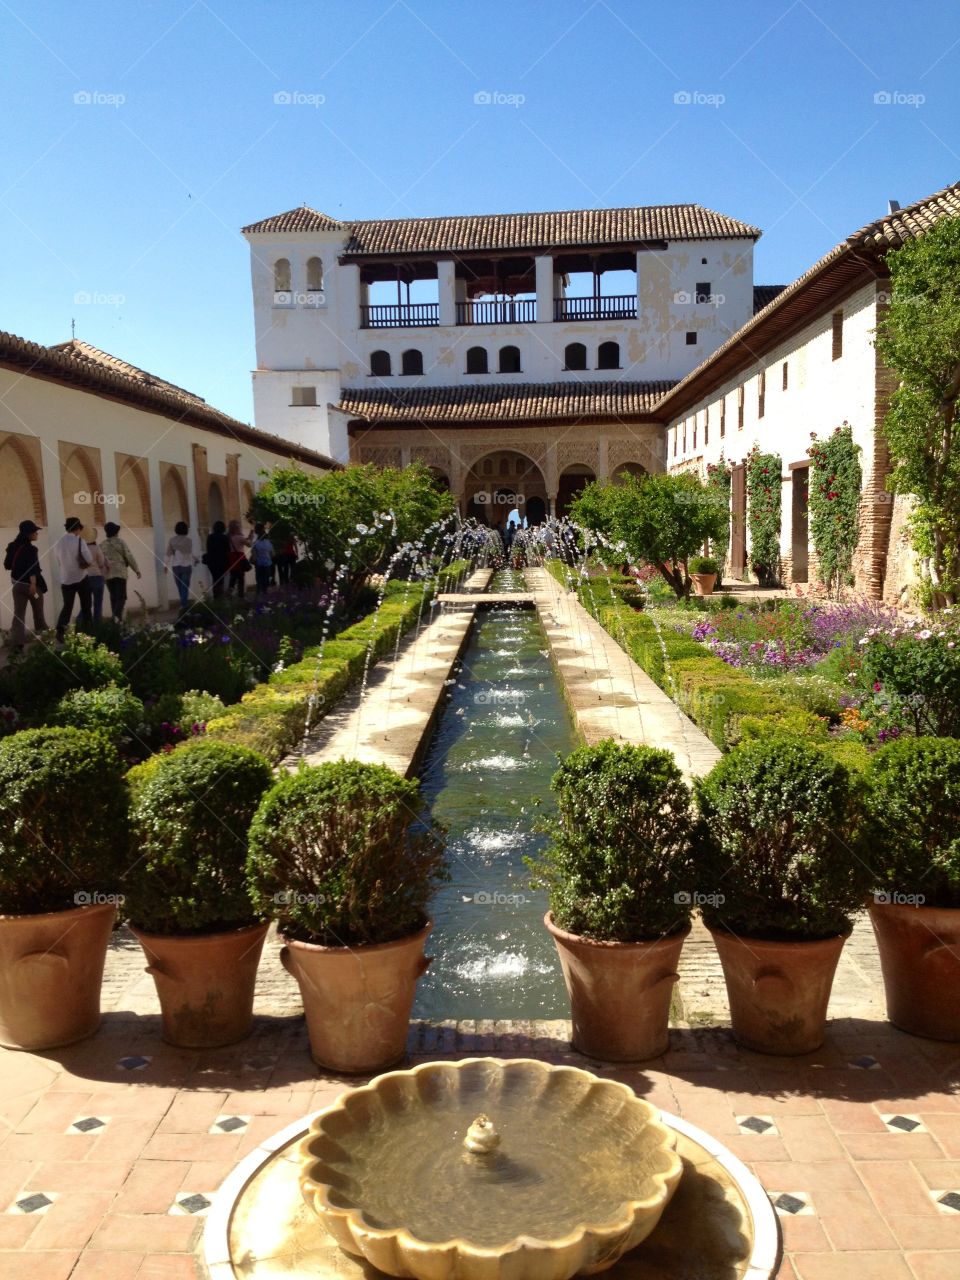 Alhambra, Granada Spain 